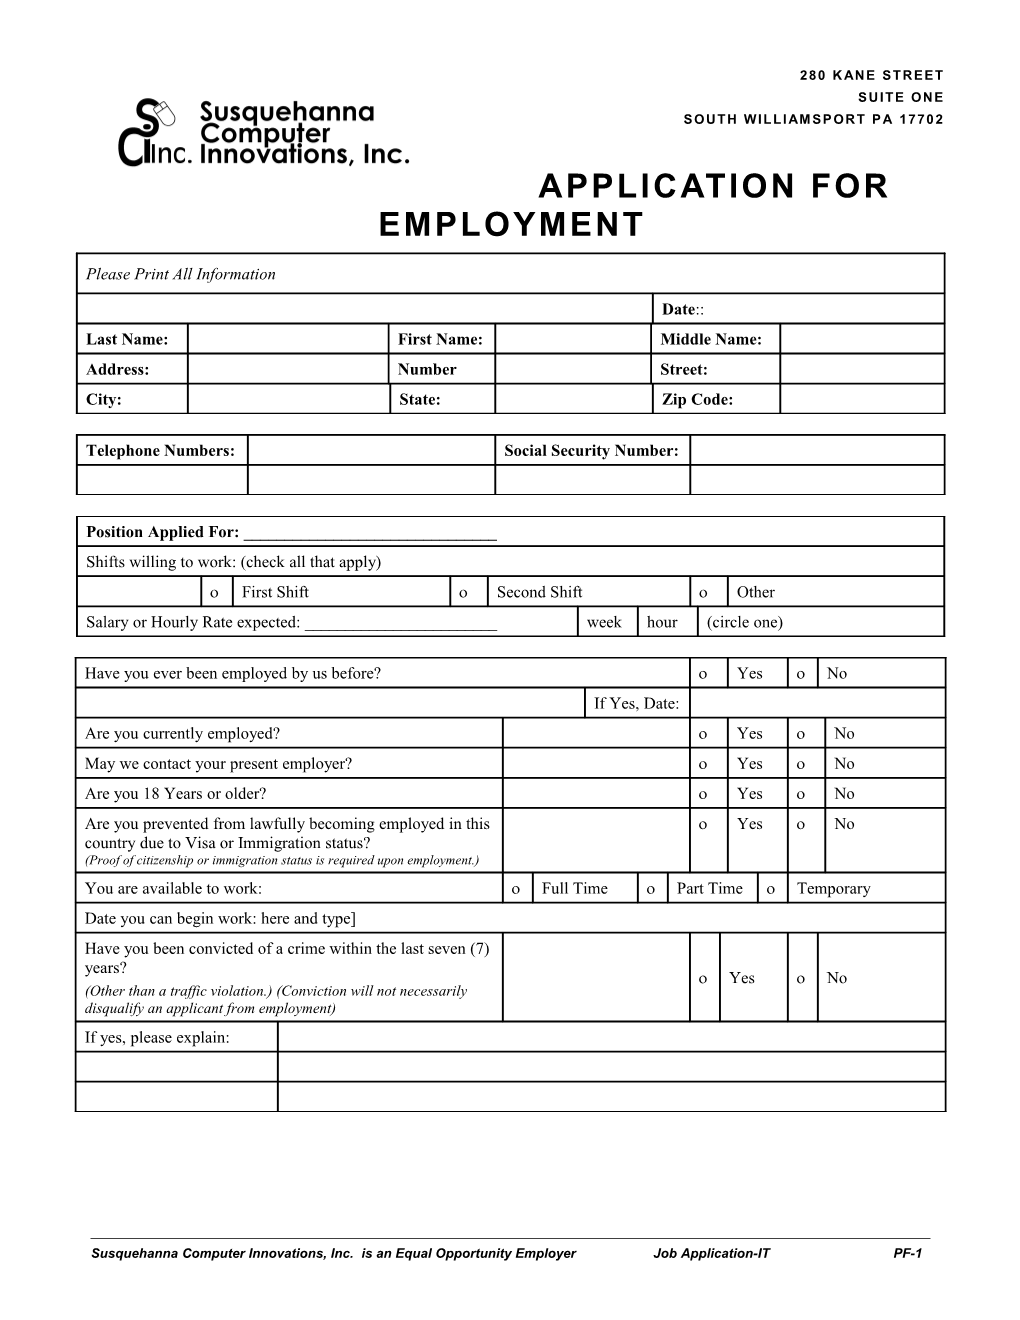 Job Application - IT